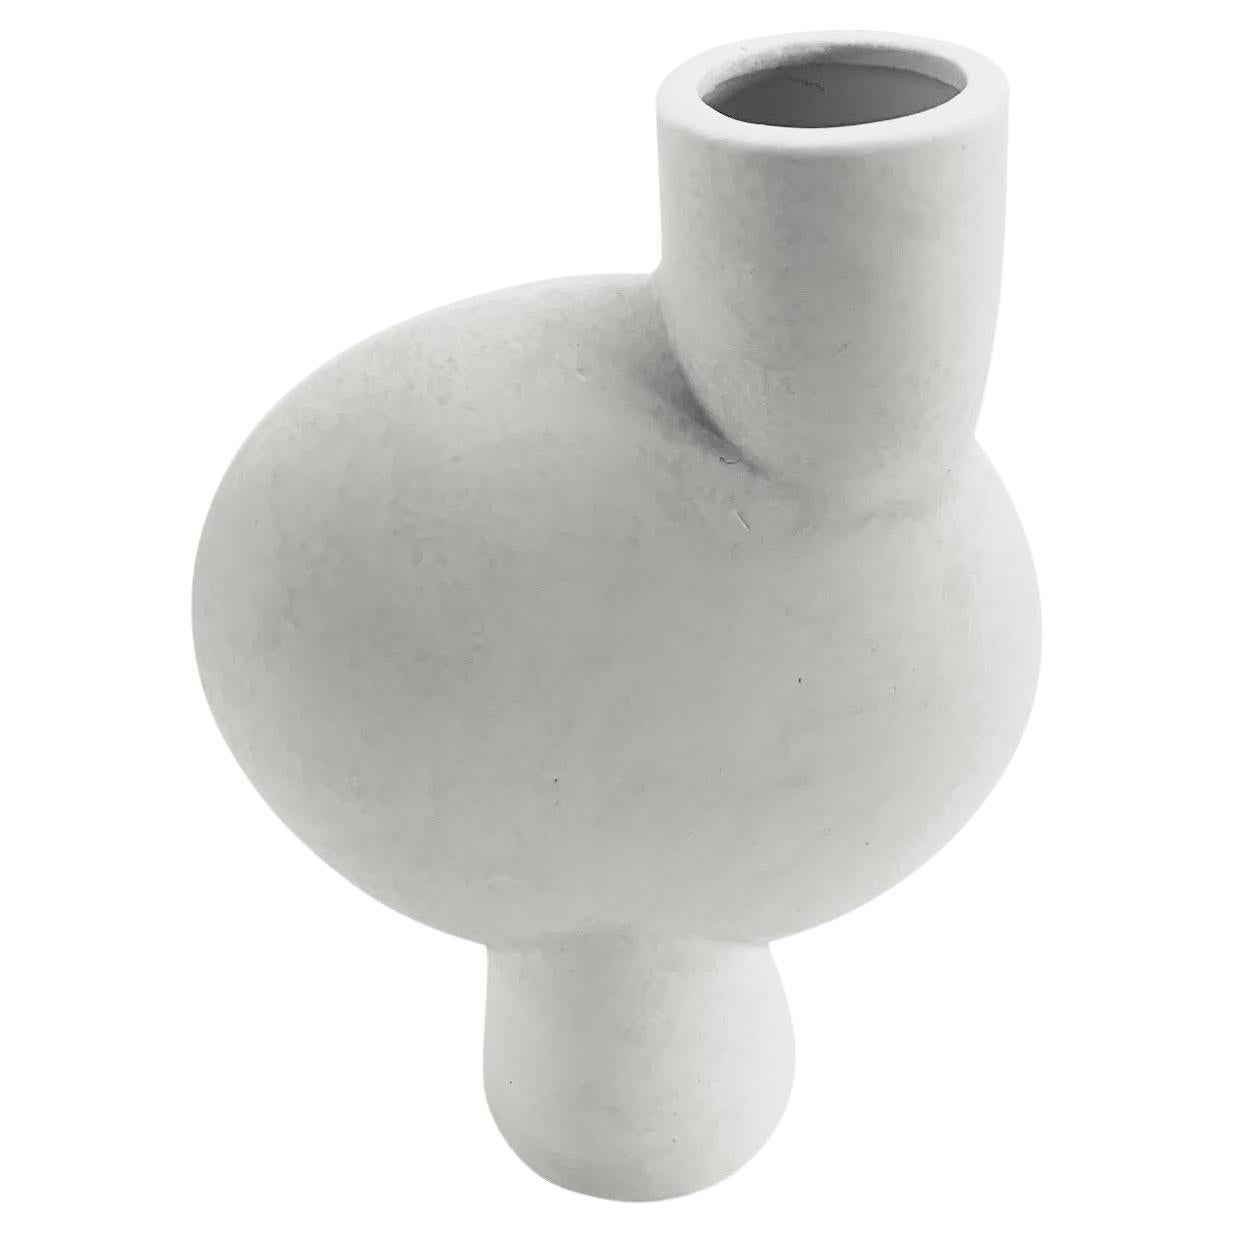 White Smooth Finish Off Center Opening Ceramic Vase, China, Contemporary